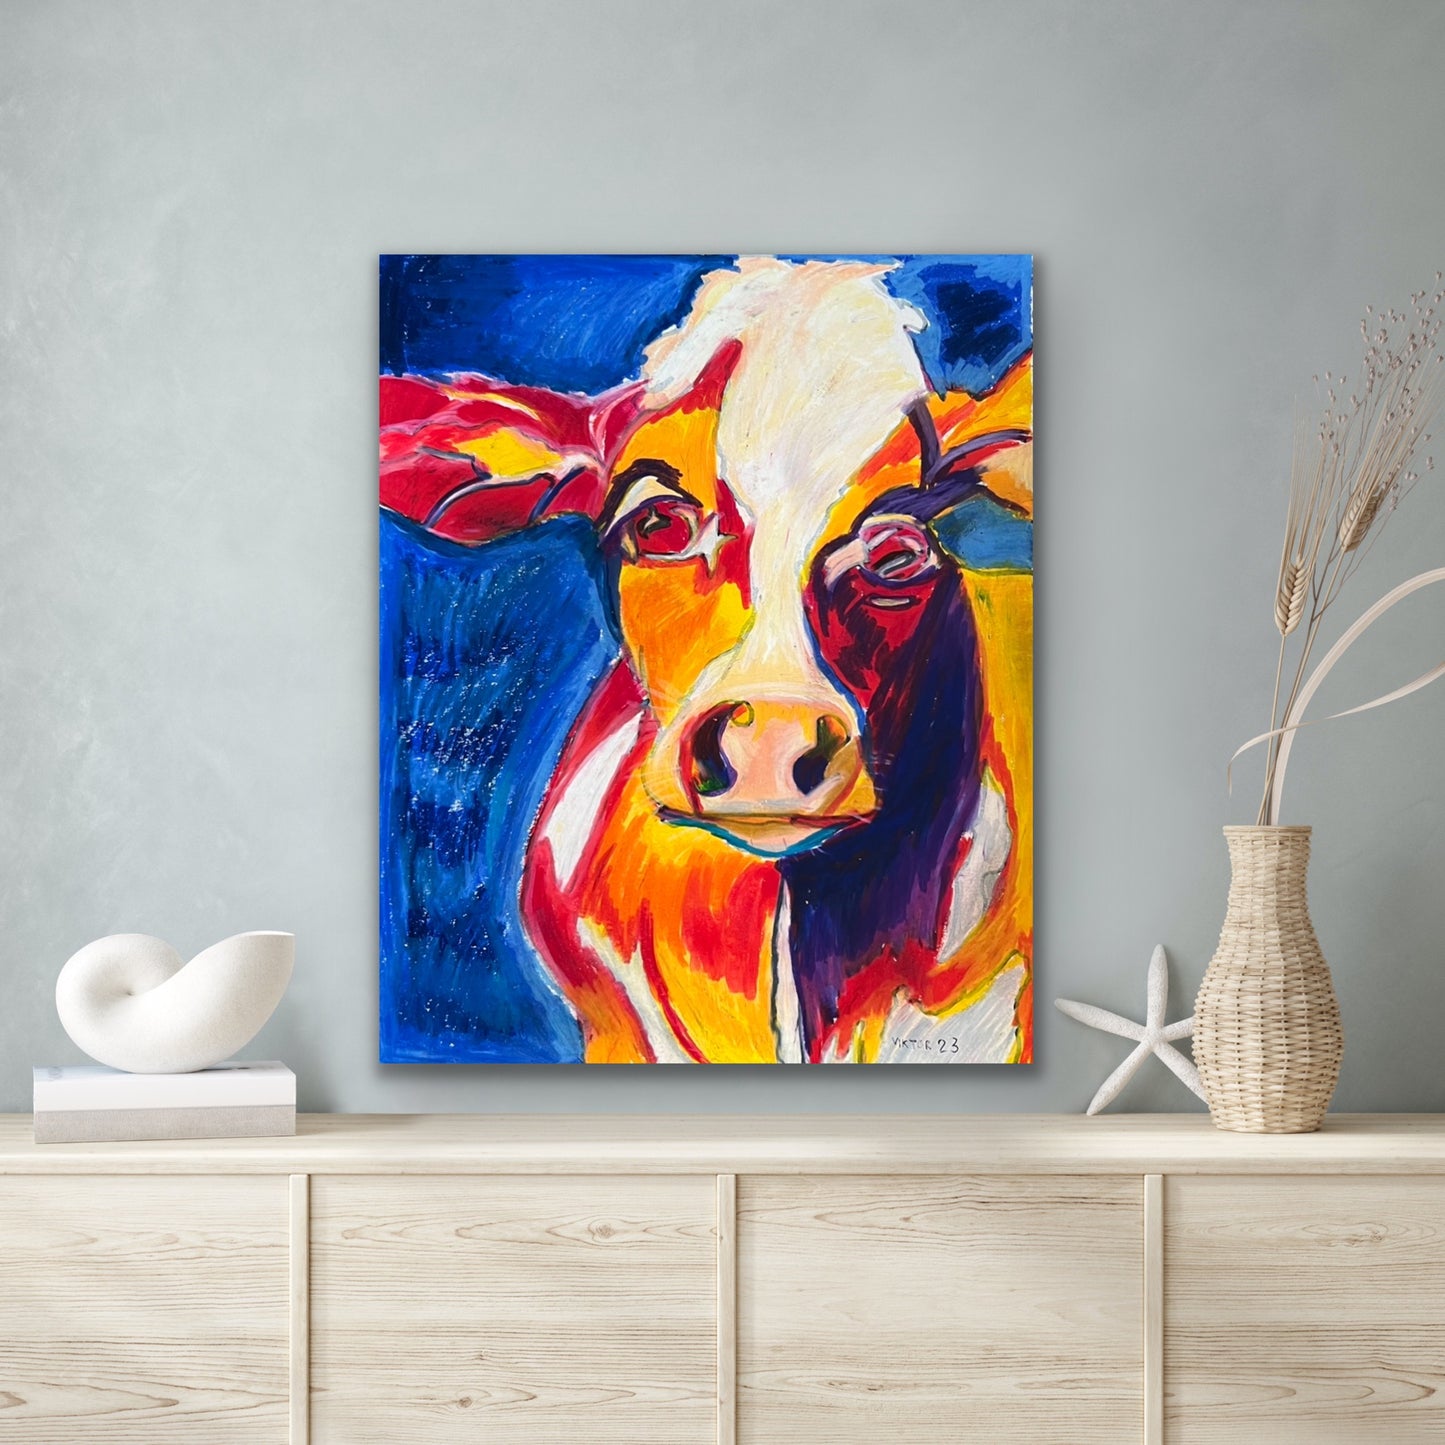 Colorful Cow - fine prints of original artwork